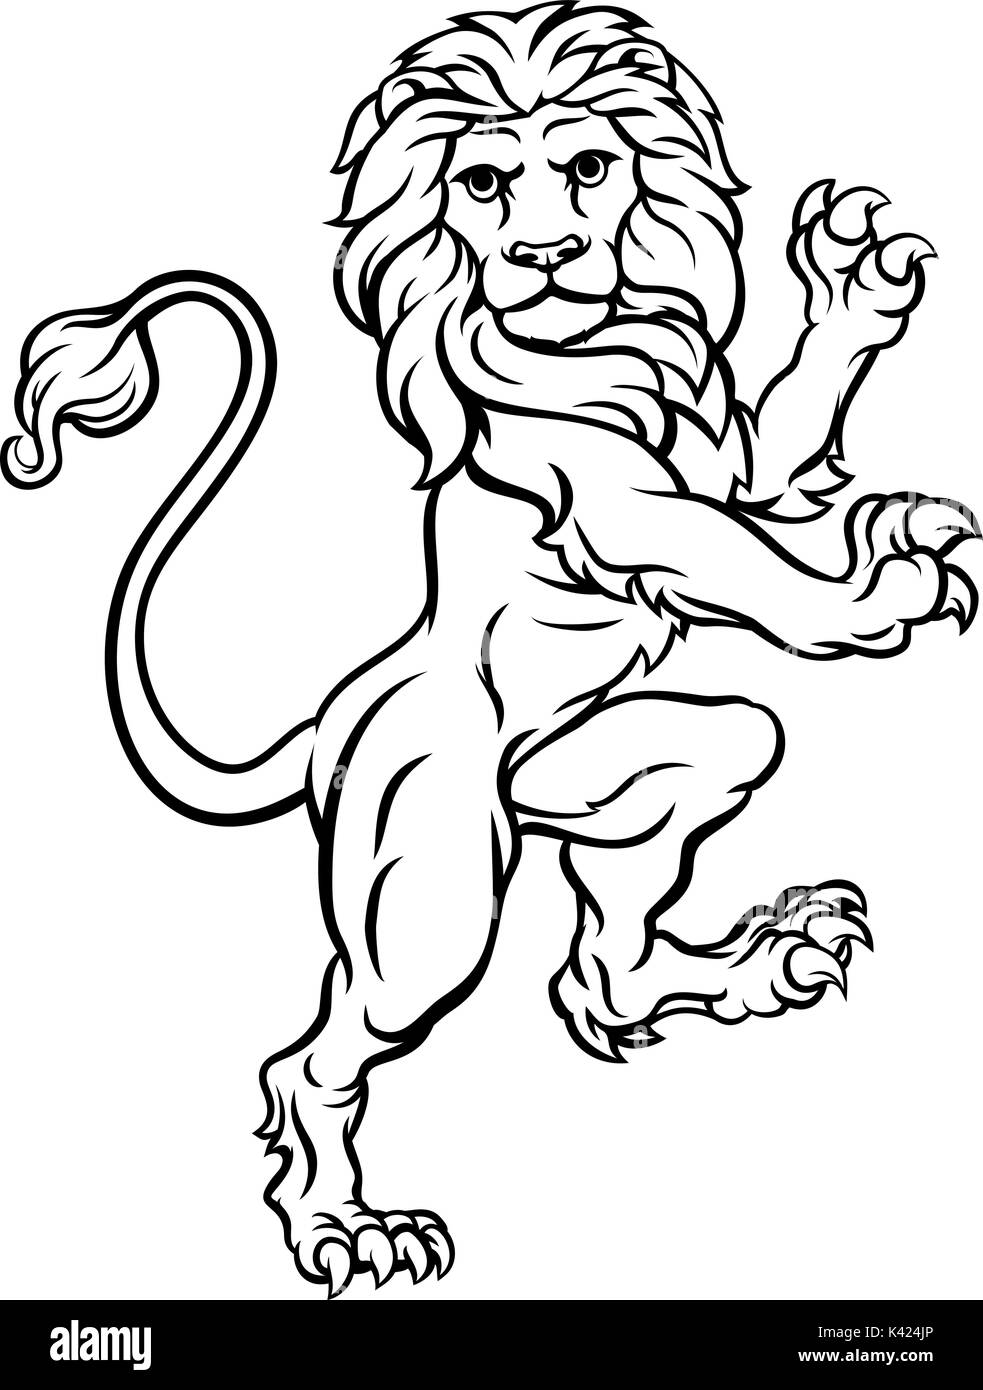 Lion Rampant Heraldic Crest Coat of Arms Stock Vector